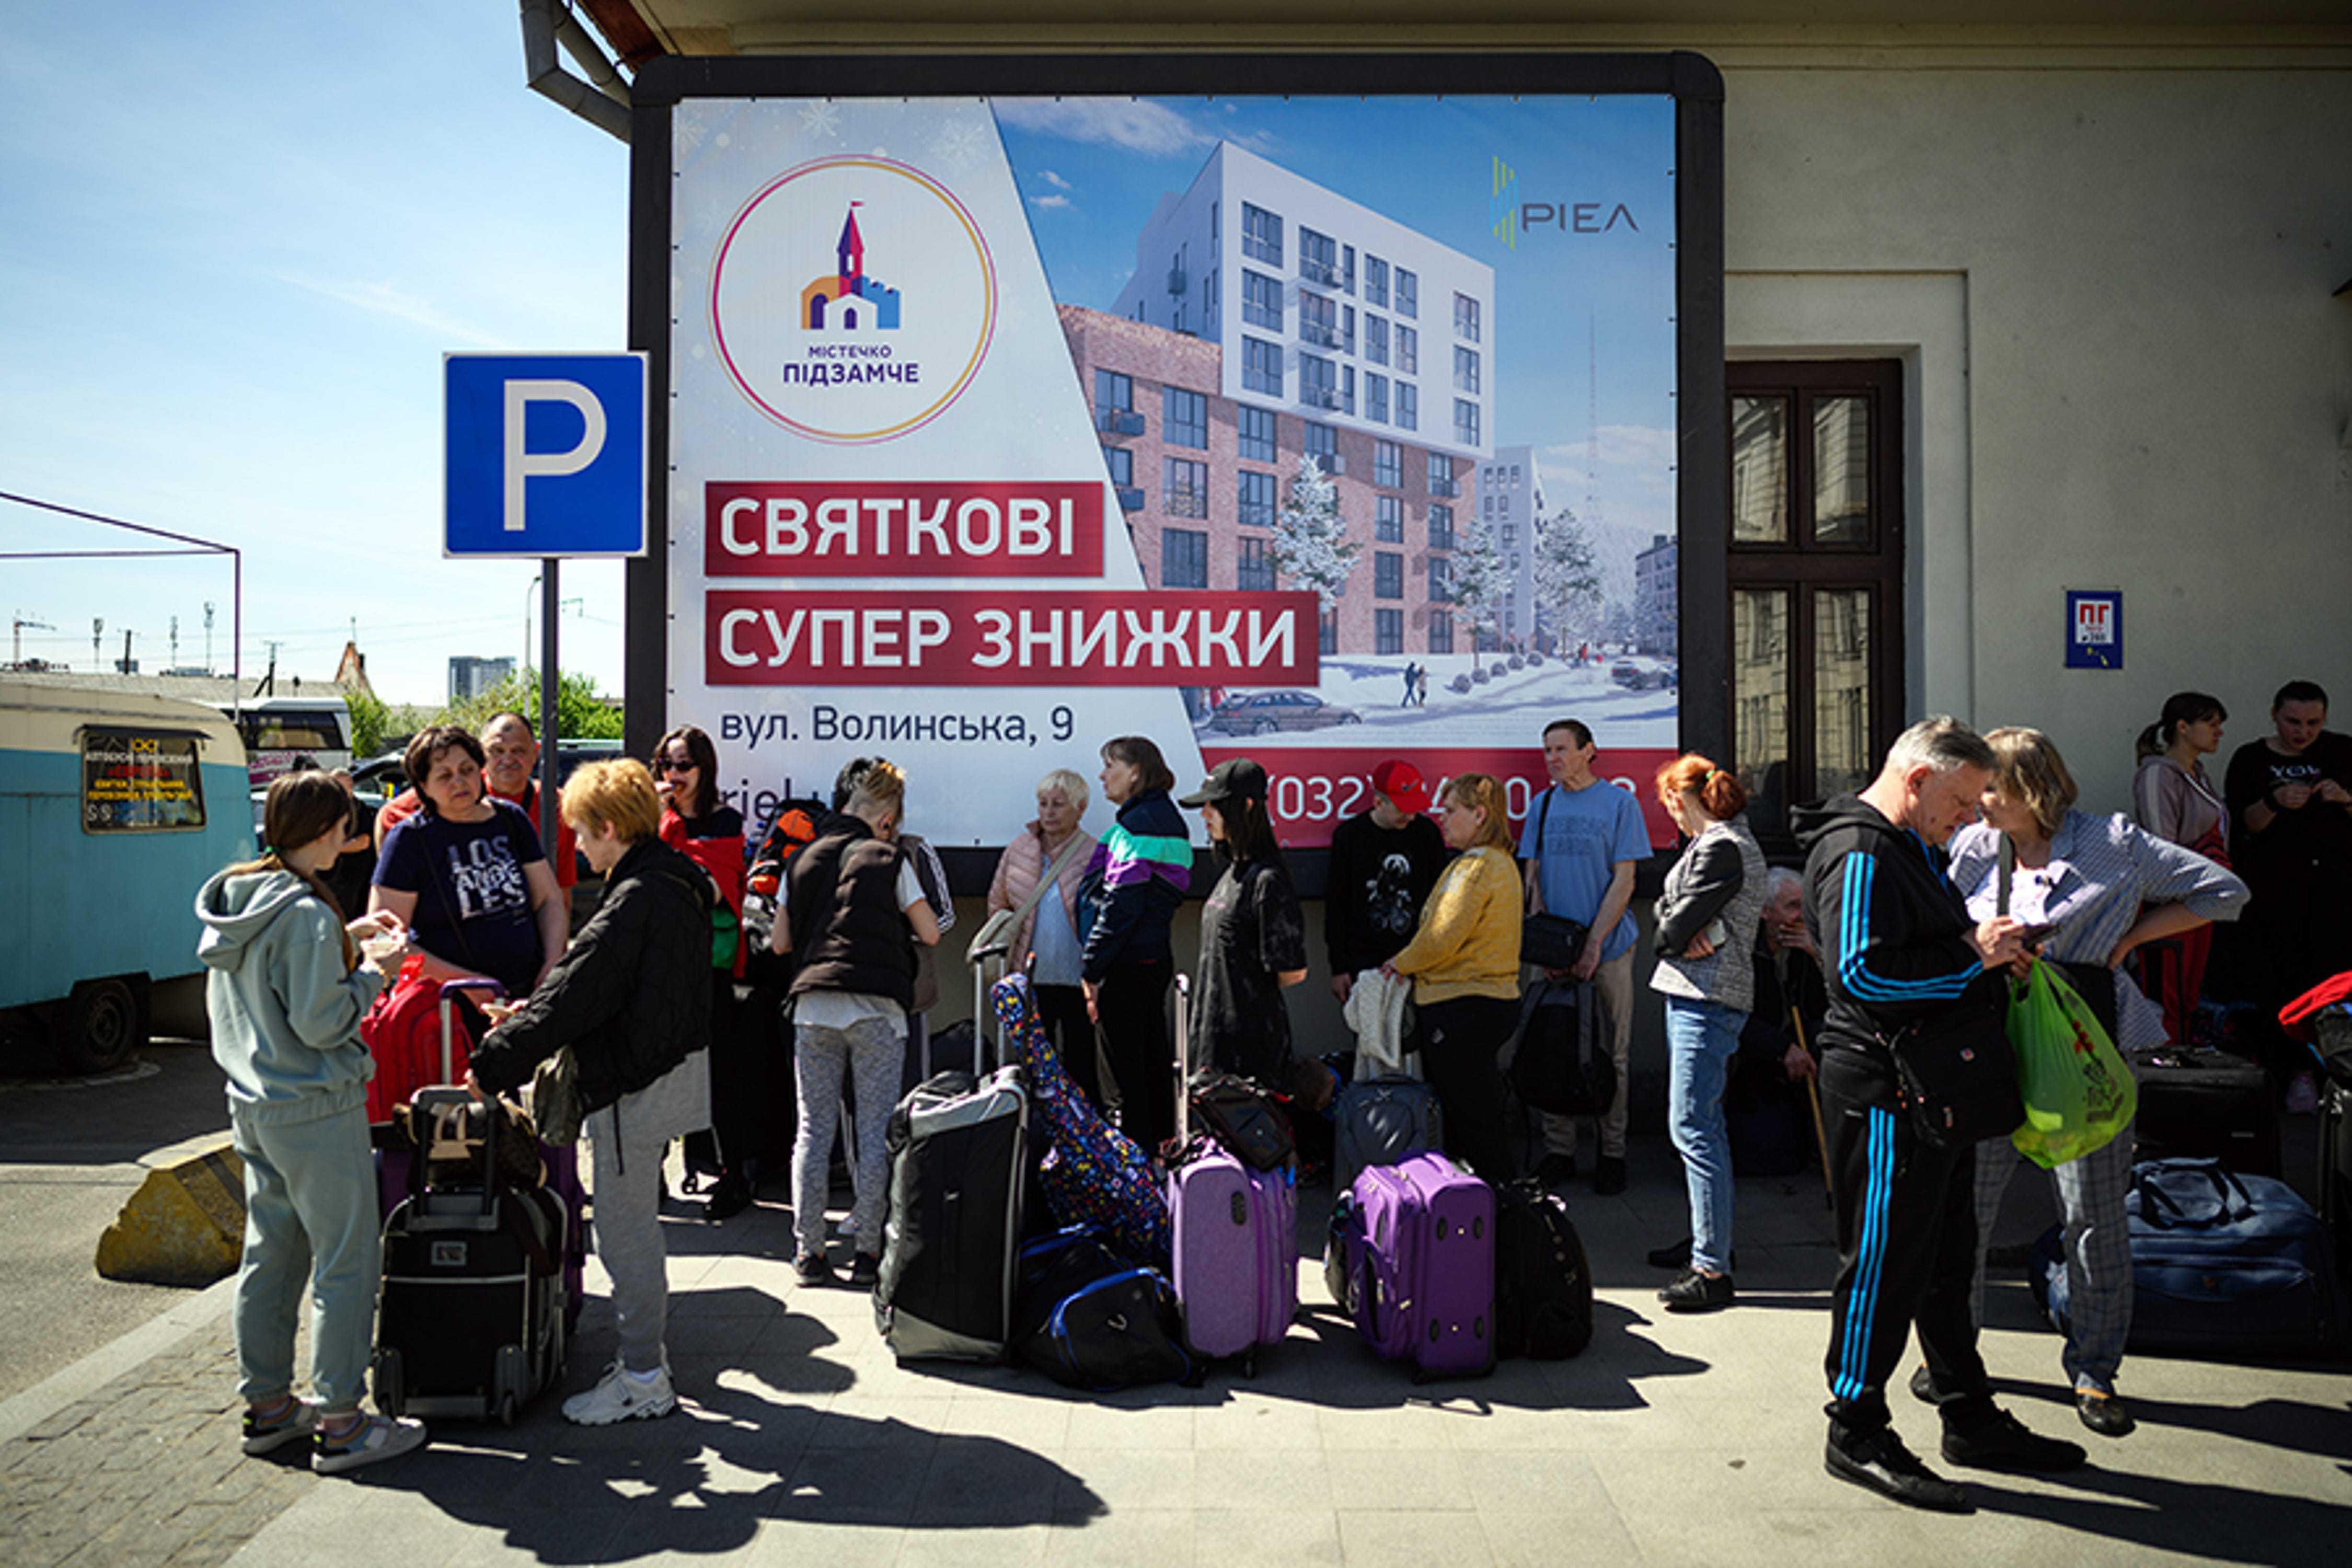 mission trips to help ukraine refugees